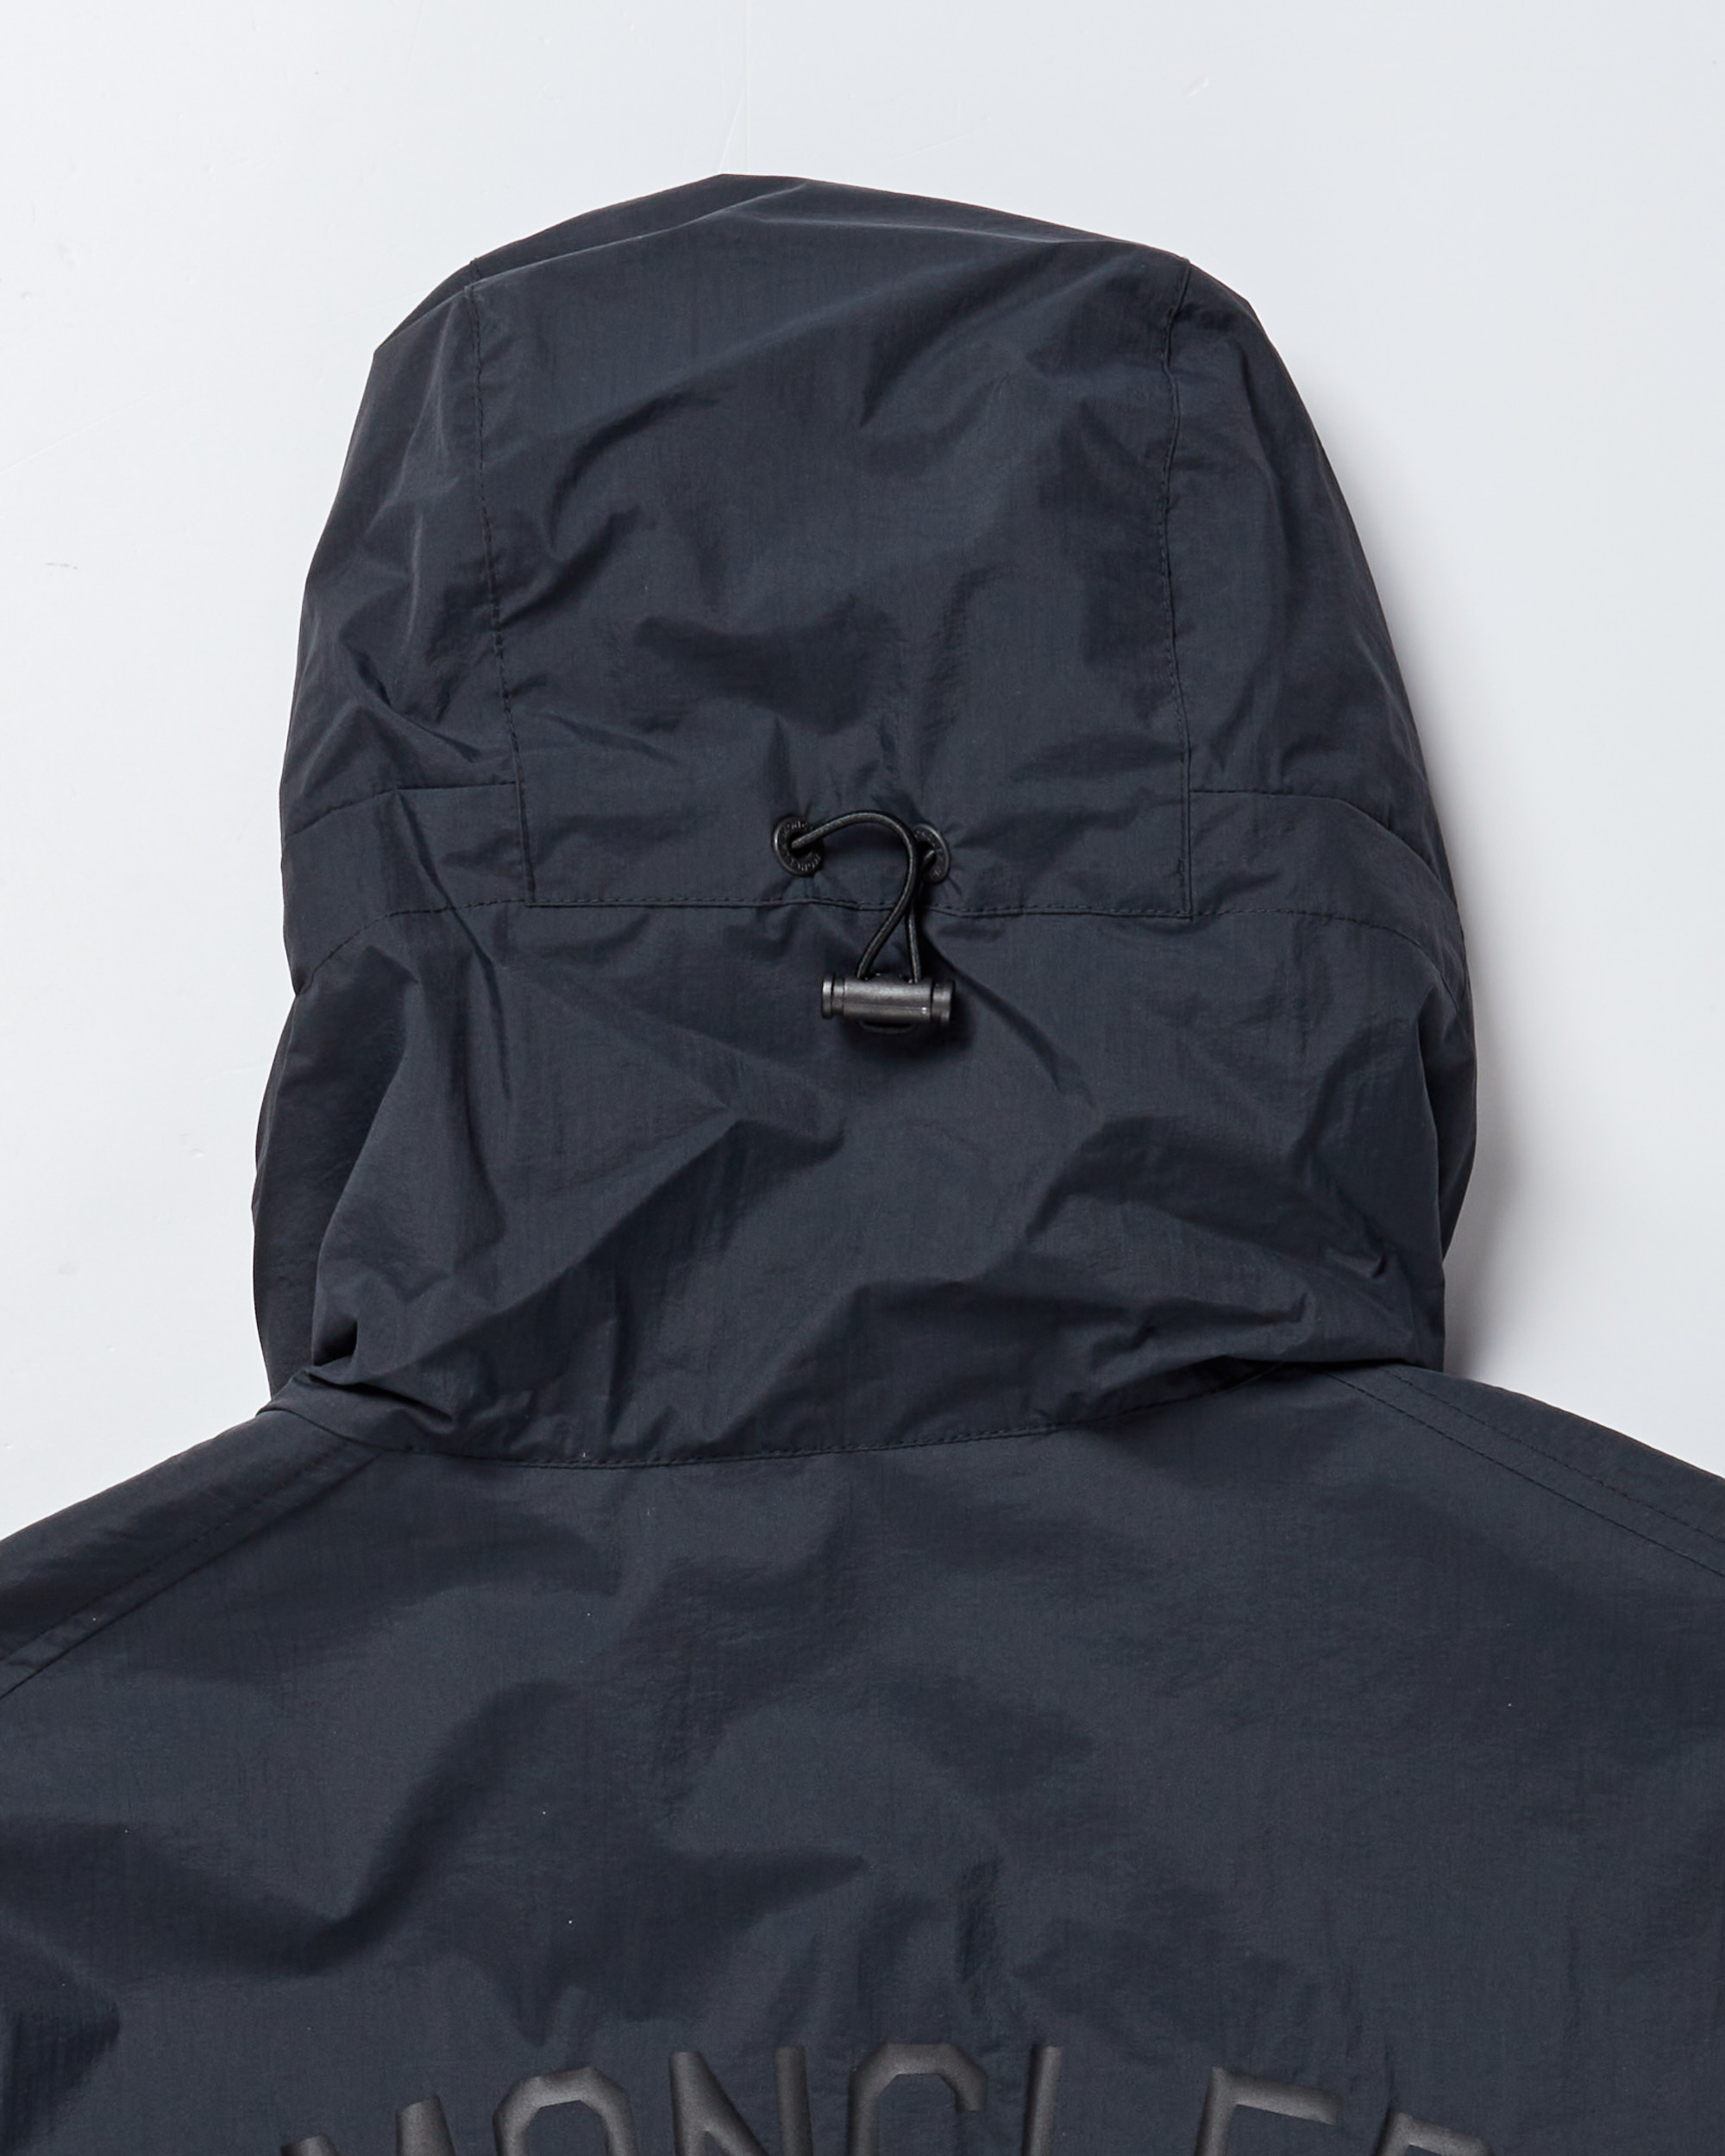 Lauzanier Jacket $840 Moncler Outerwear Technical Jackets Black